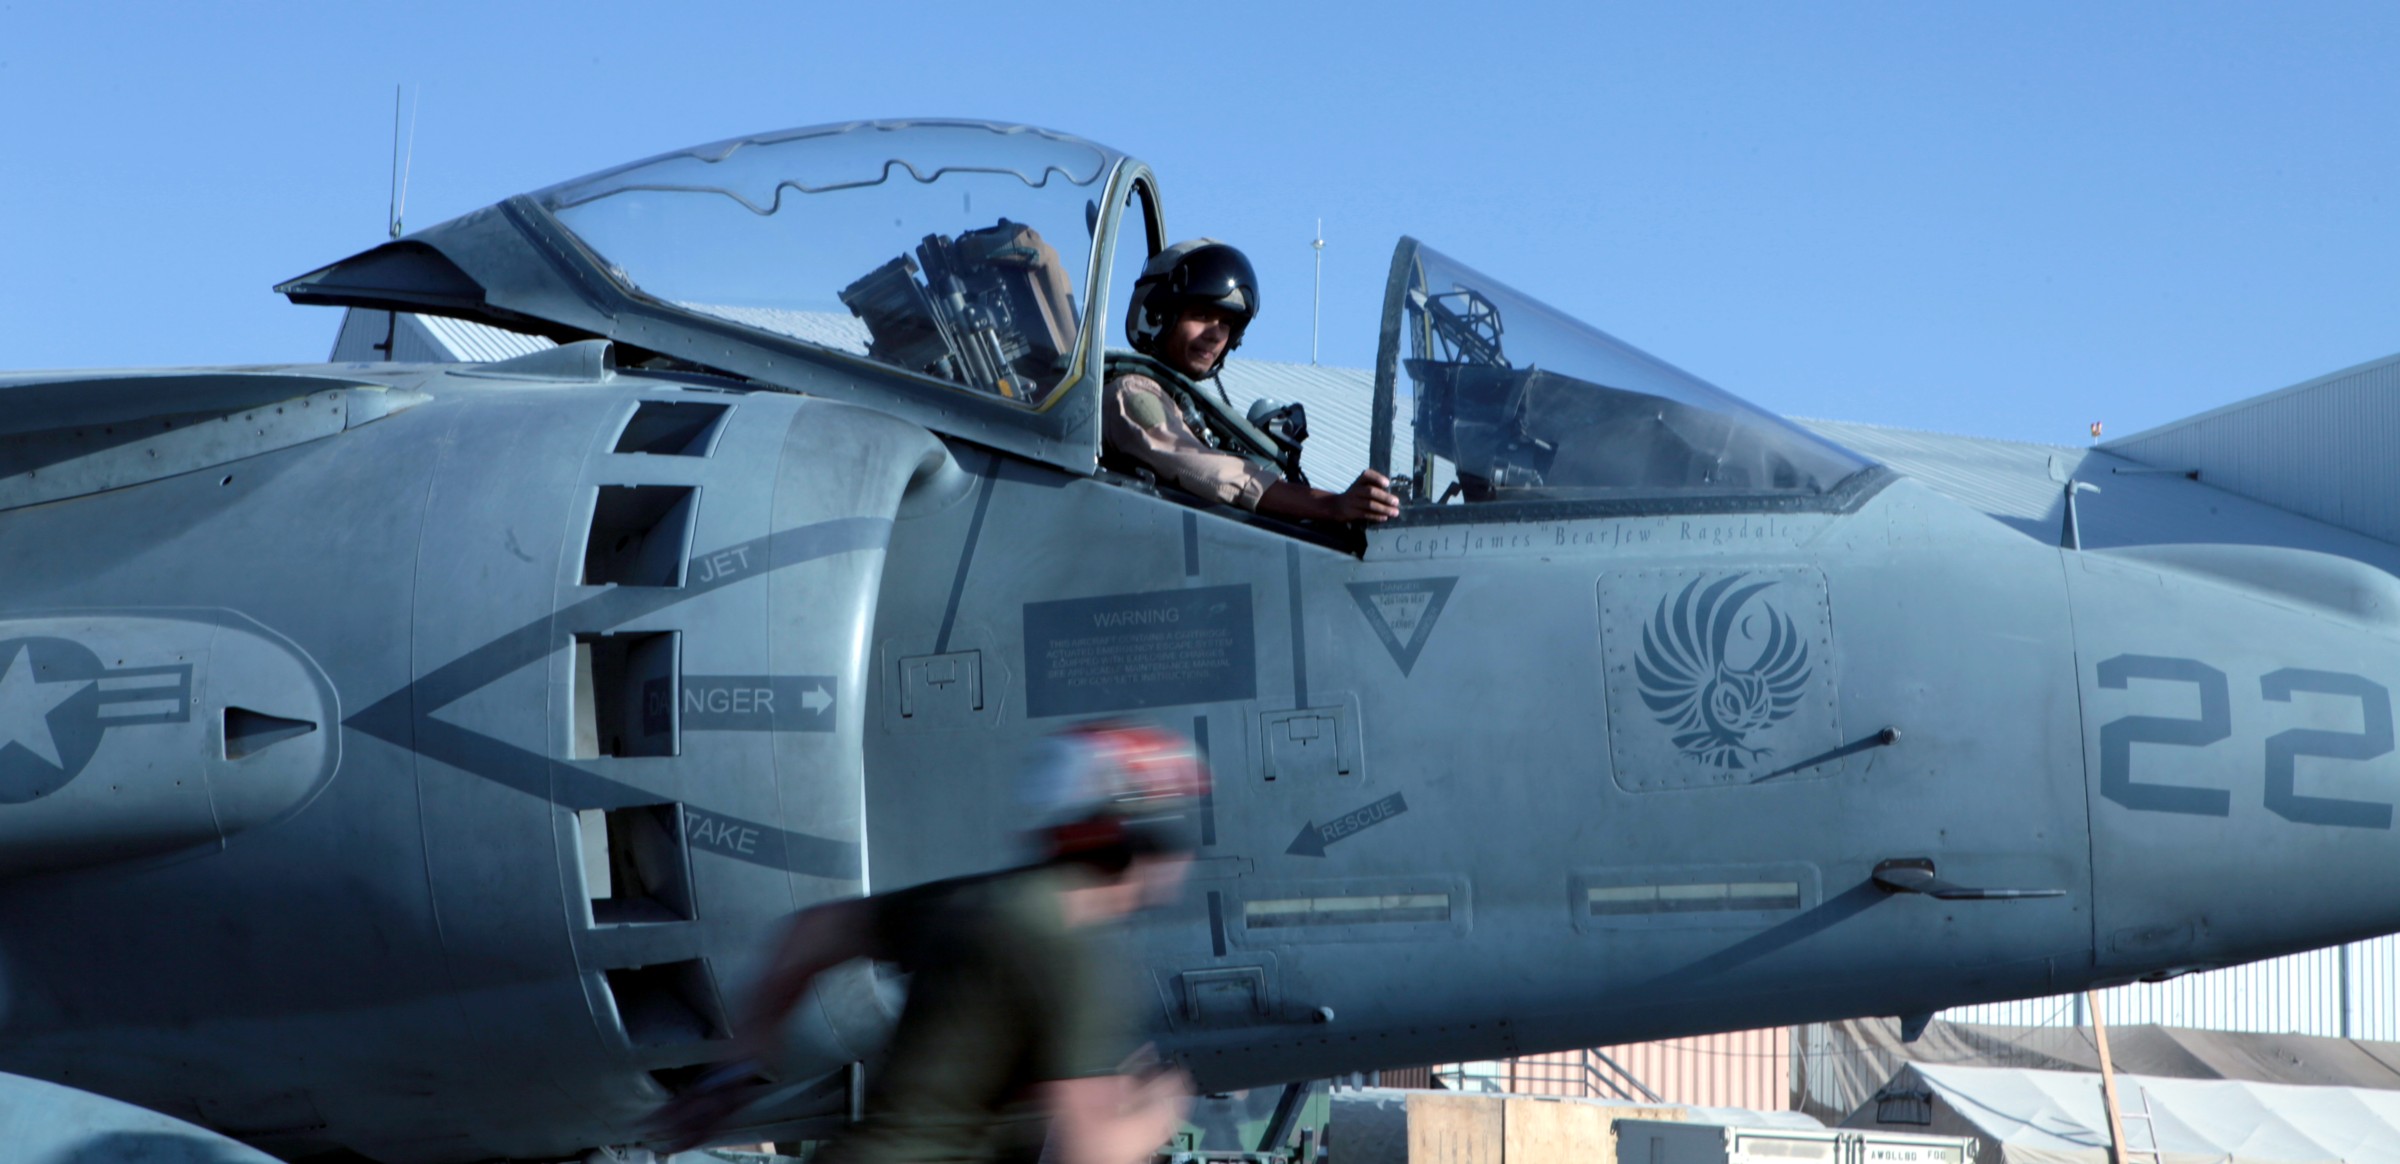 vma-513 flying nightmares av-8b harrier kandahar airfield afghanistan 2011